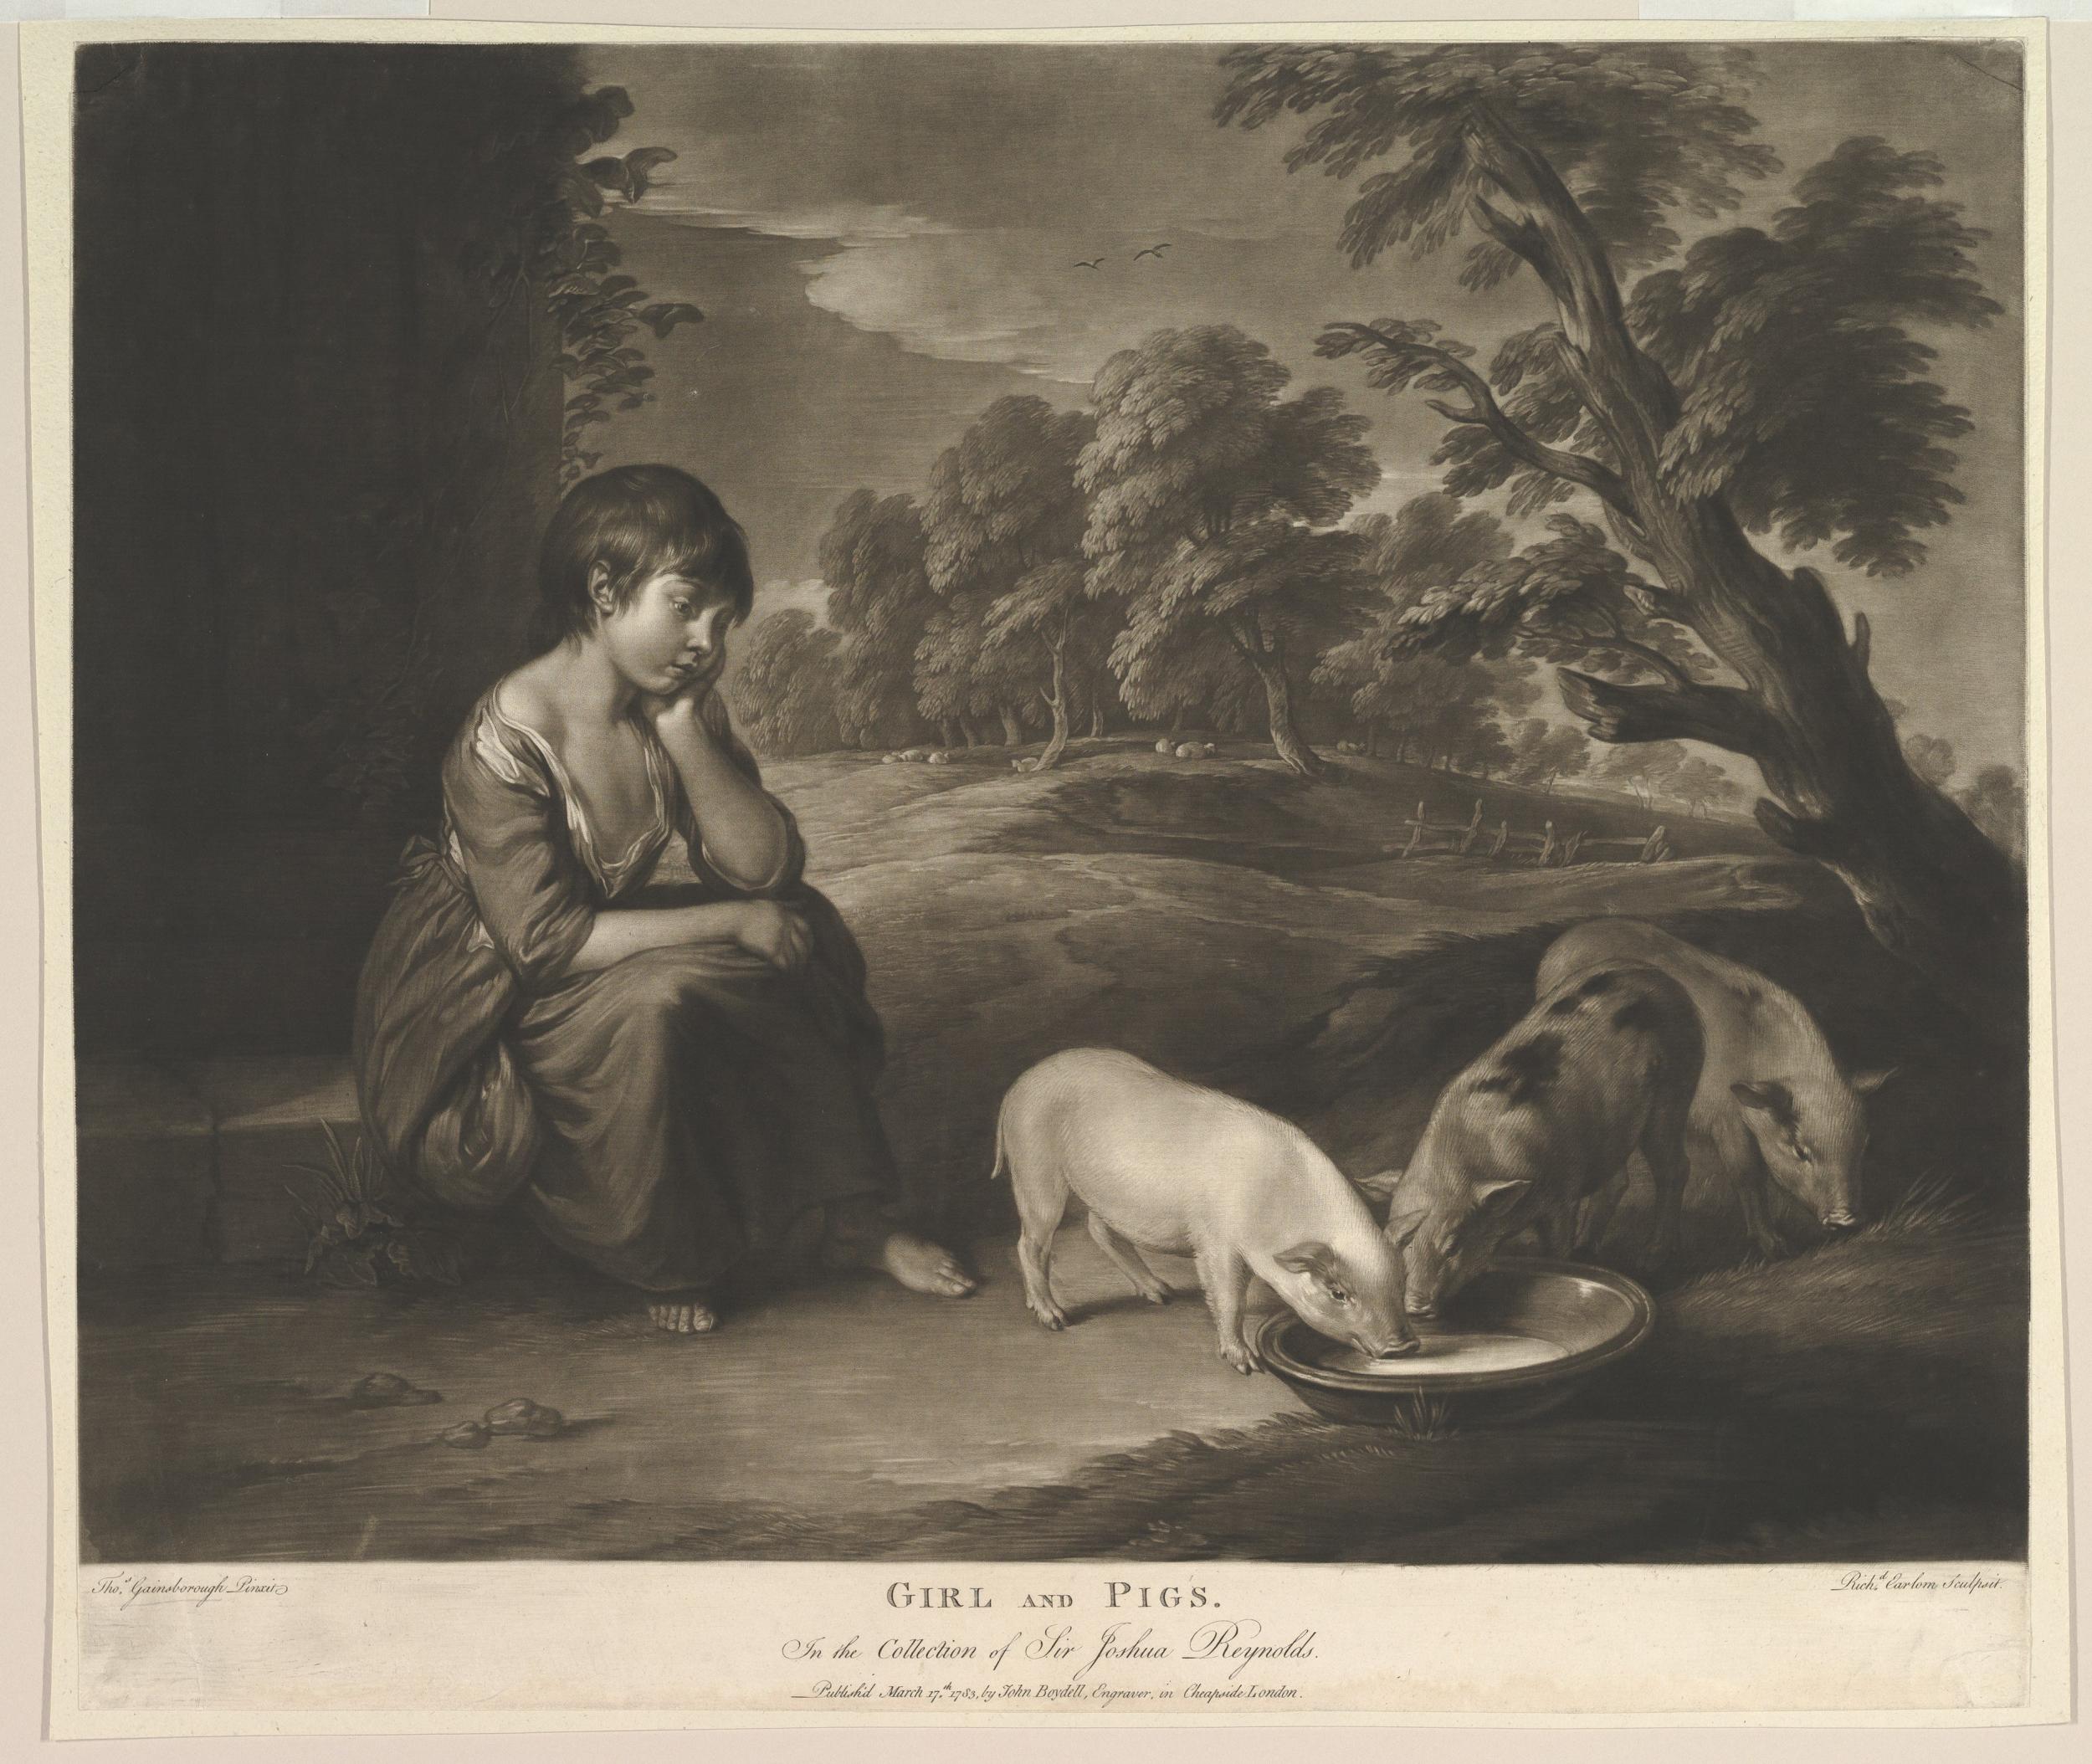 Girl and Pigs, Richard Earlom